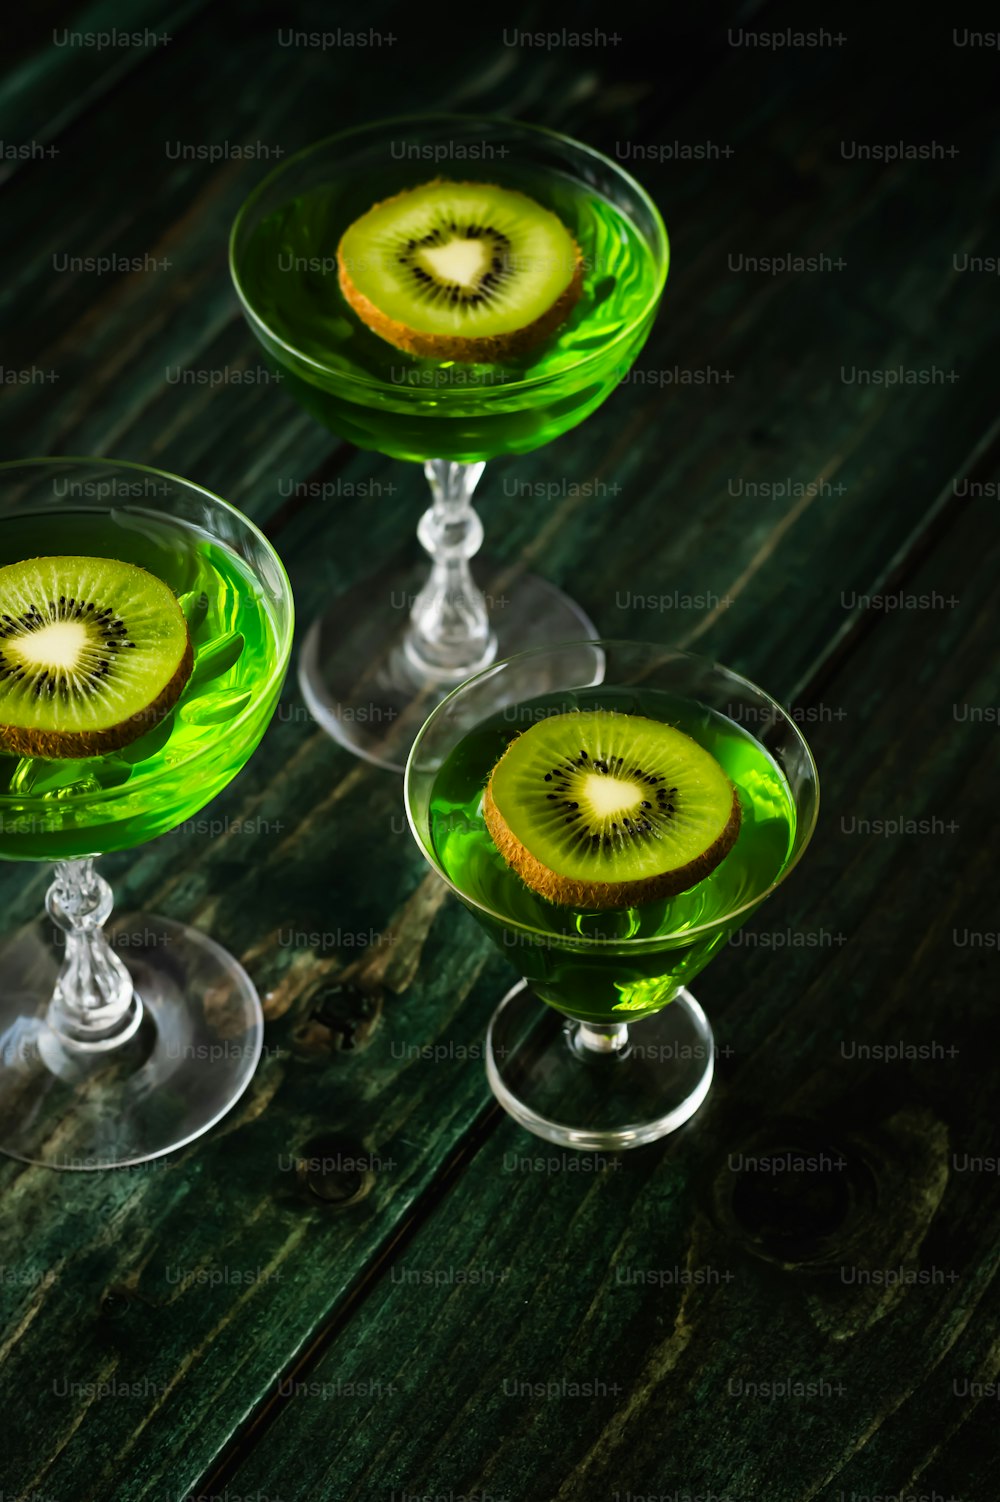 three glasses of green liquid with a kiwi cut in half